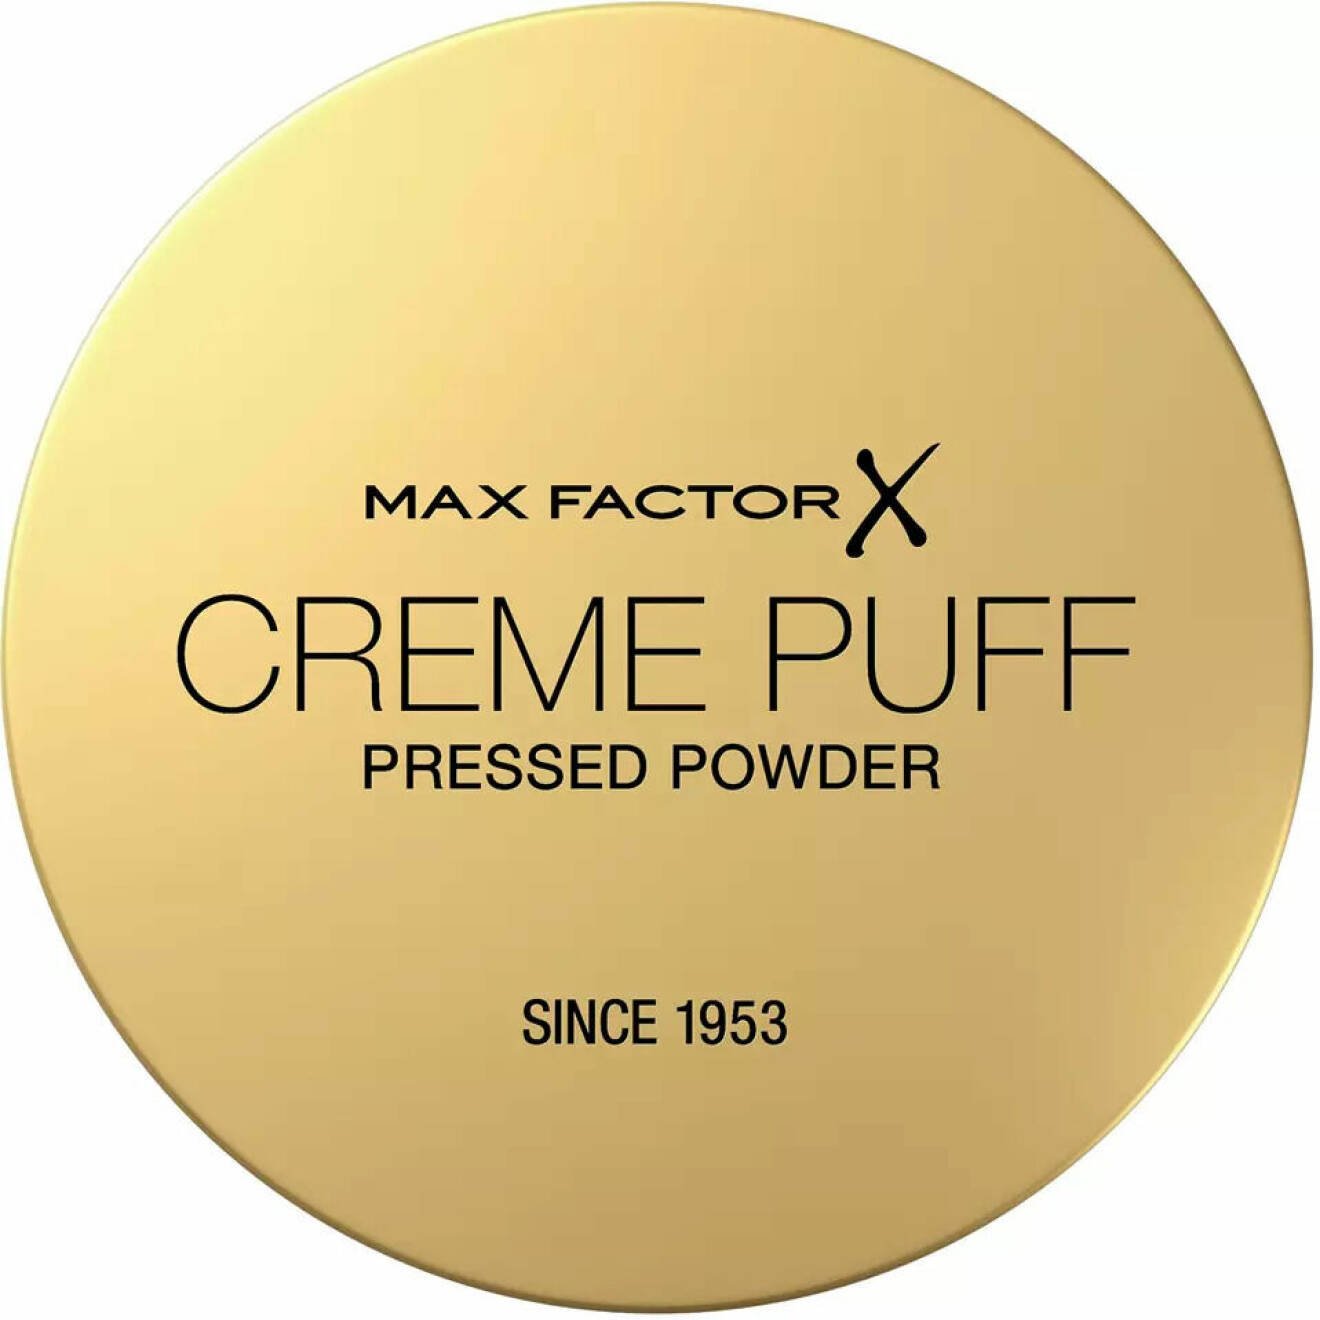 Max Factor Creme Puff pressed powder